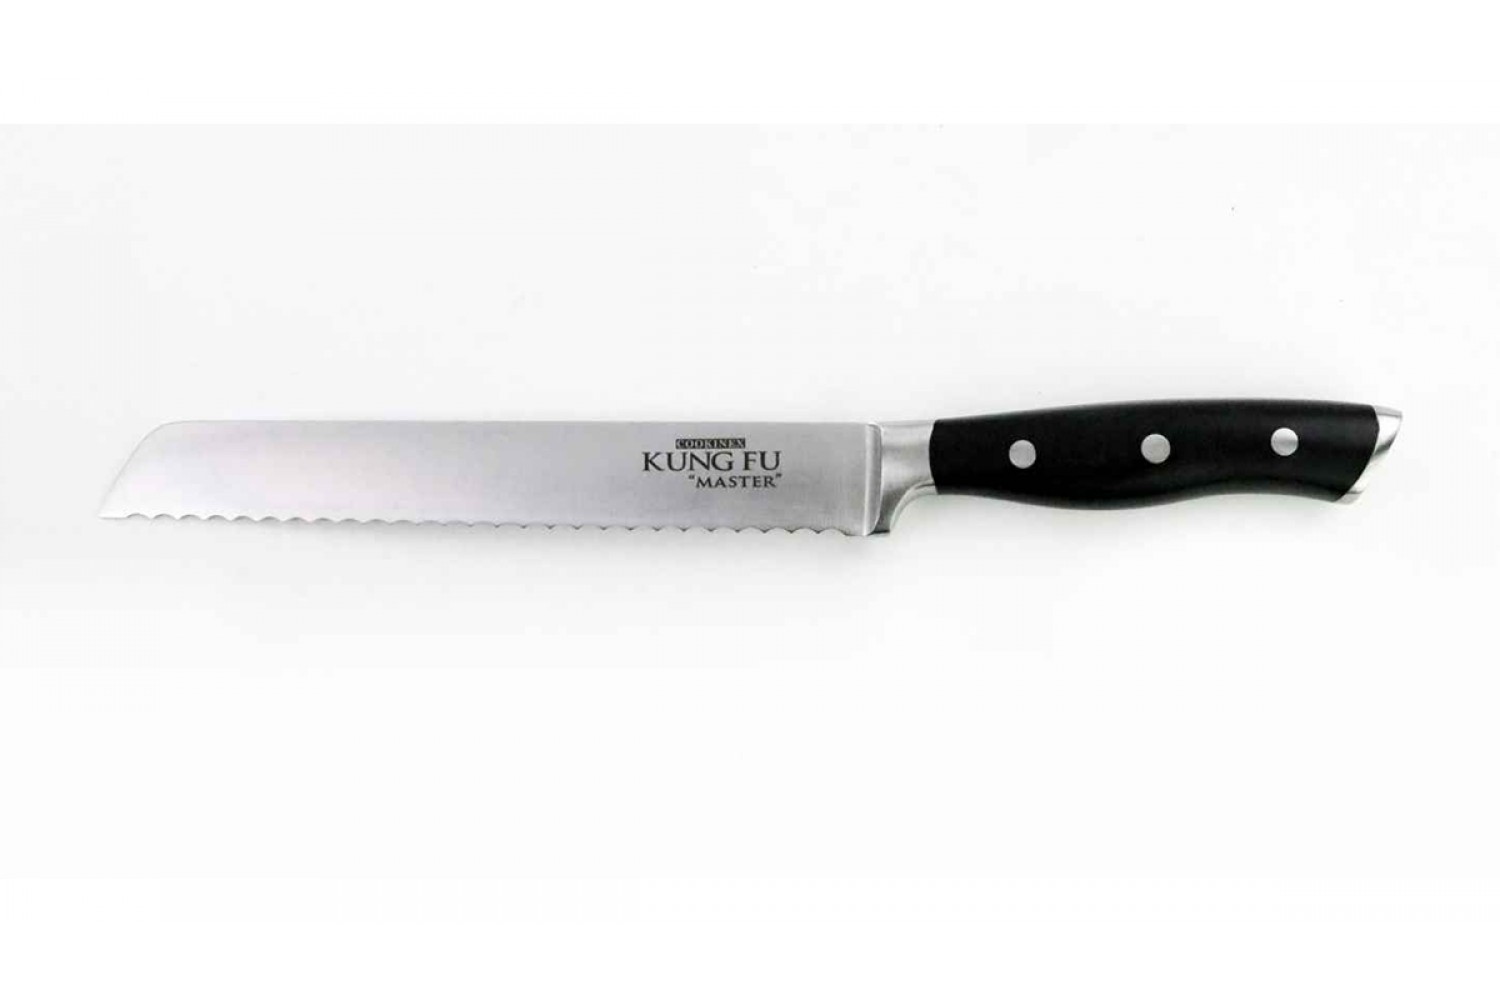 "KUNG FU MASTER" 8" BREAD KNIFE